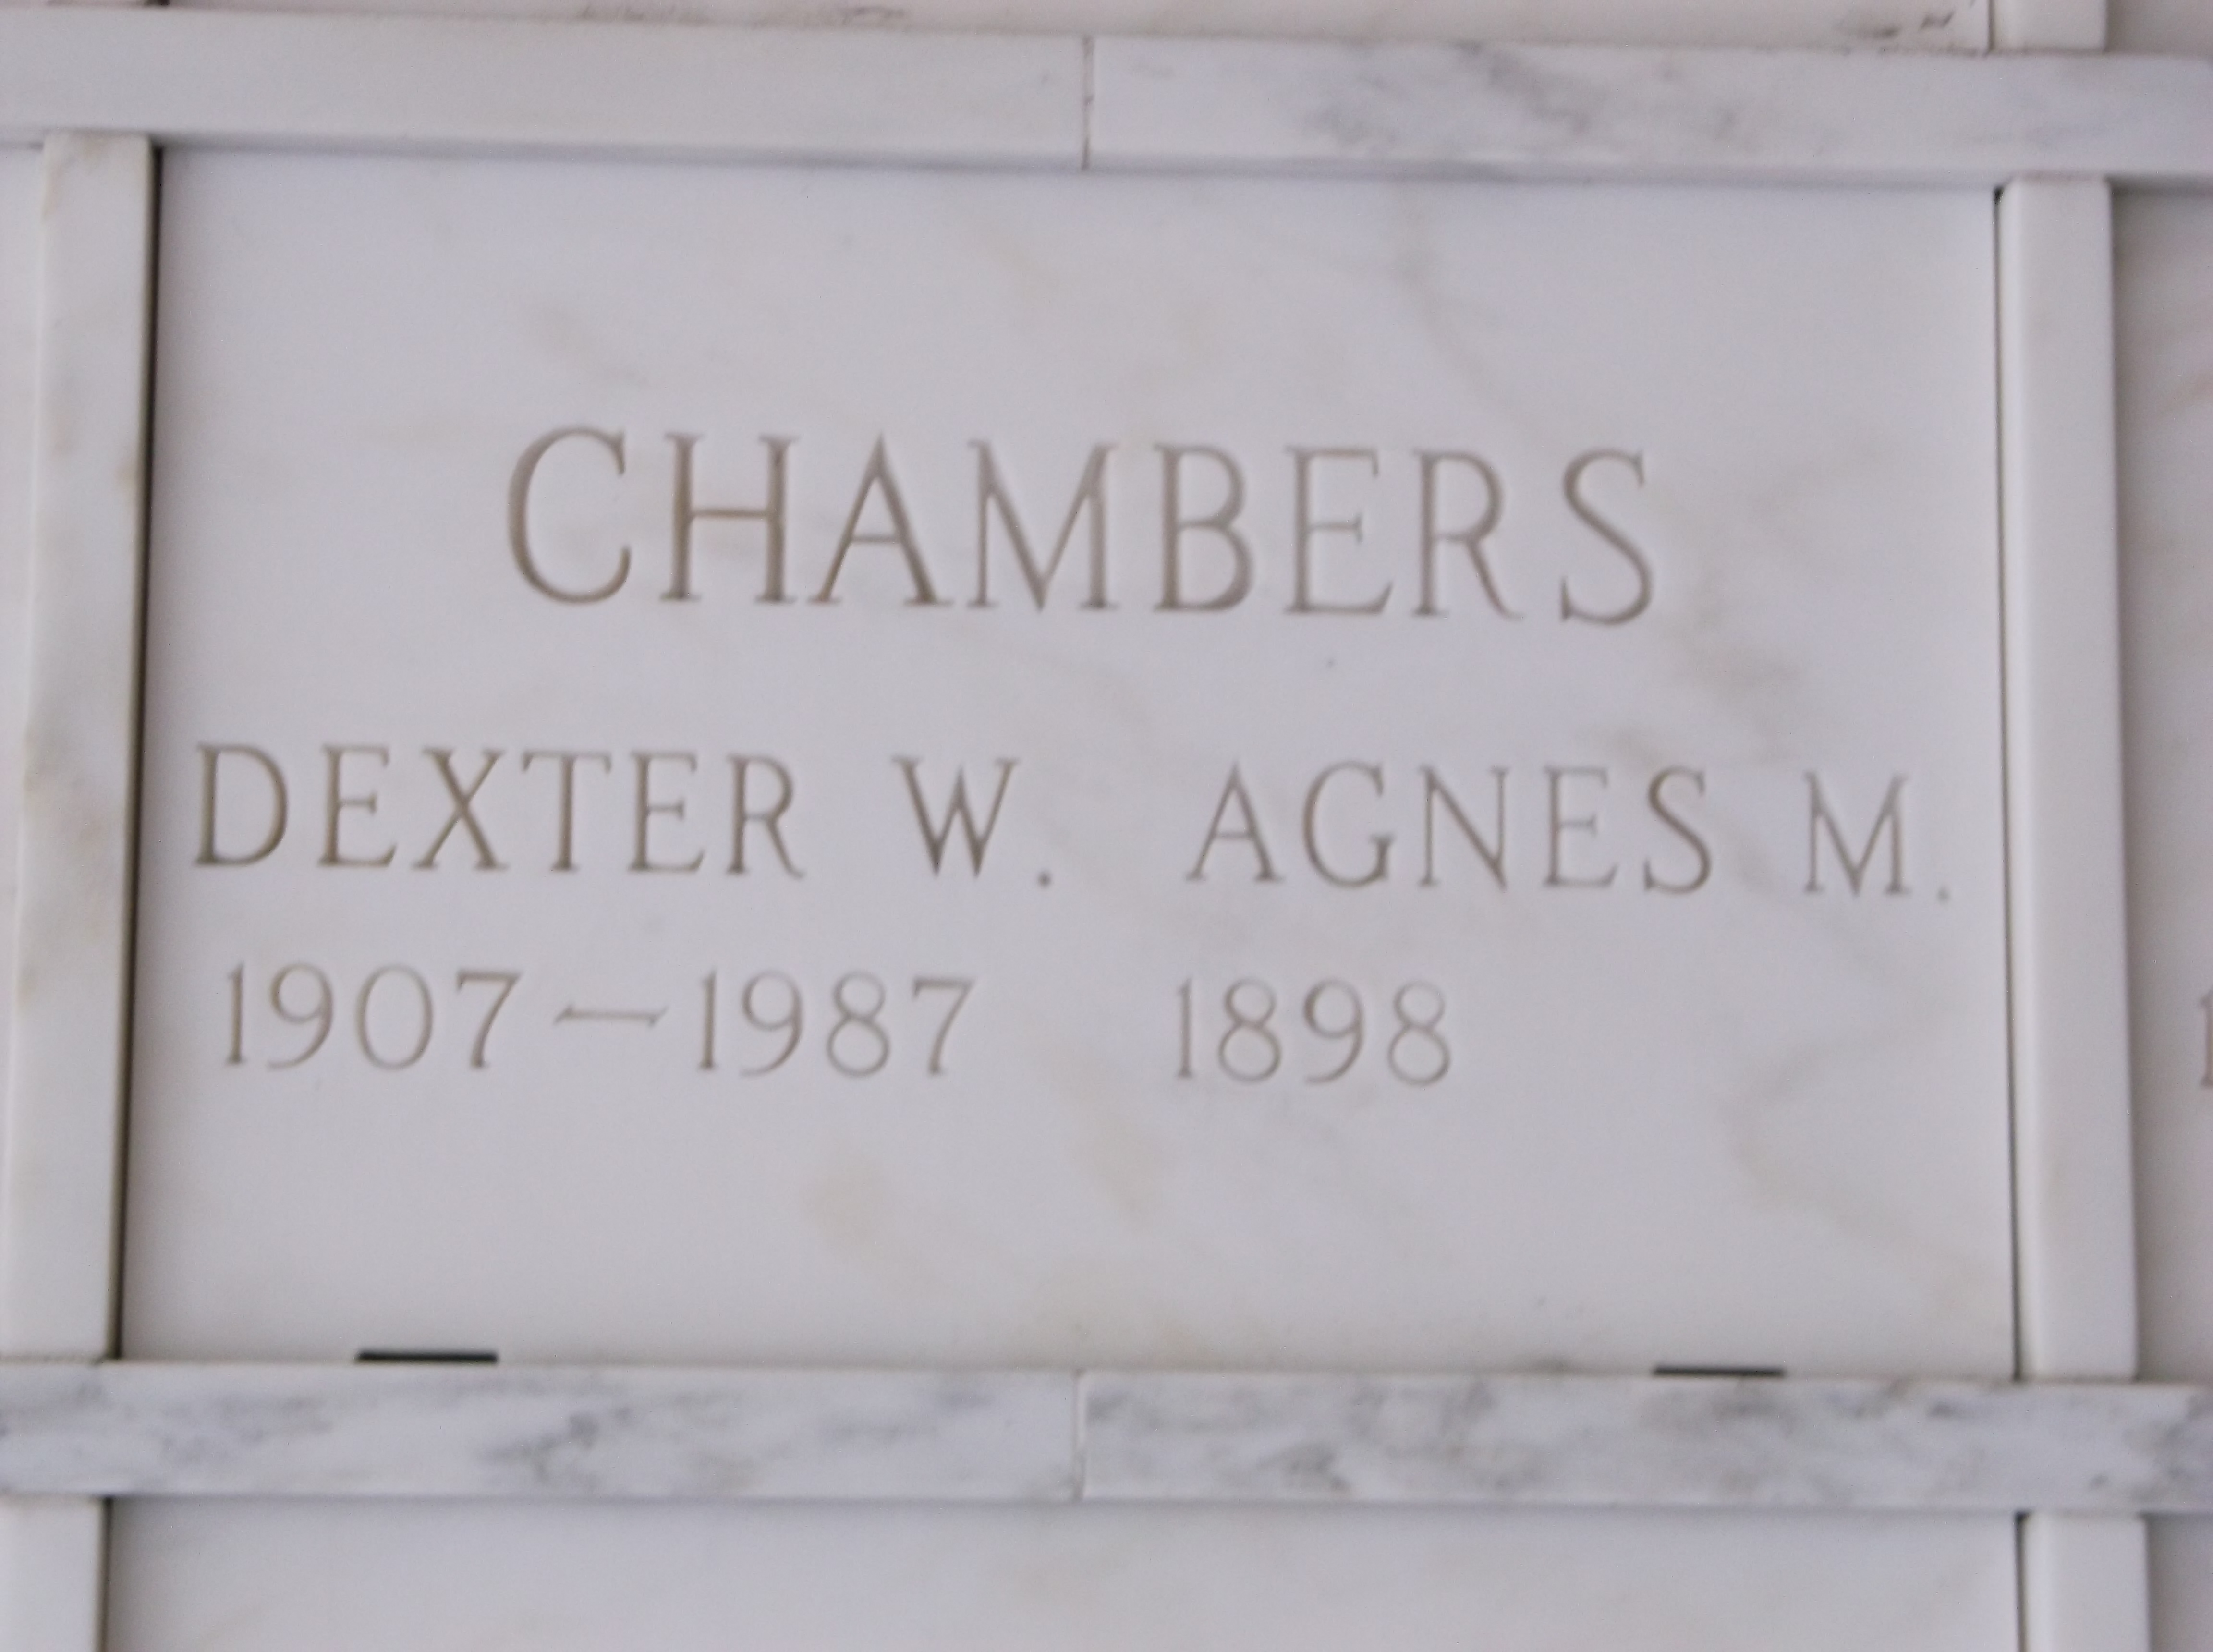 Agnes M Chambers